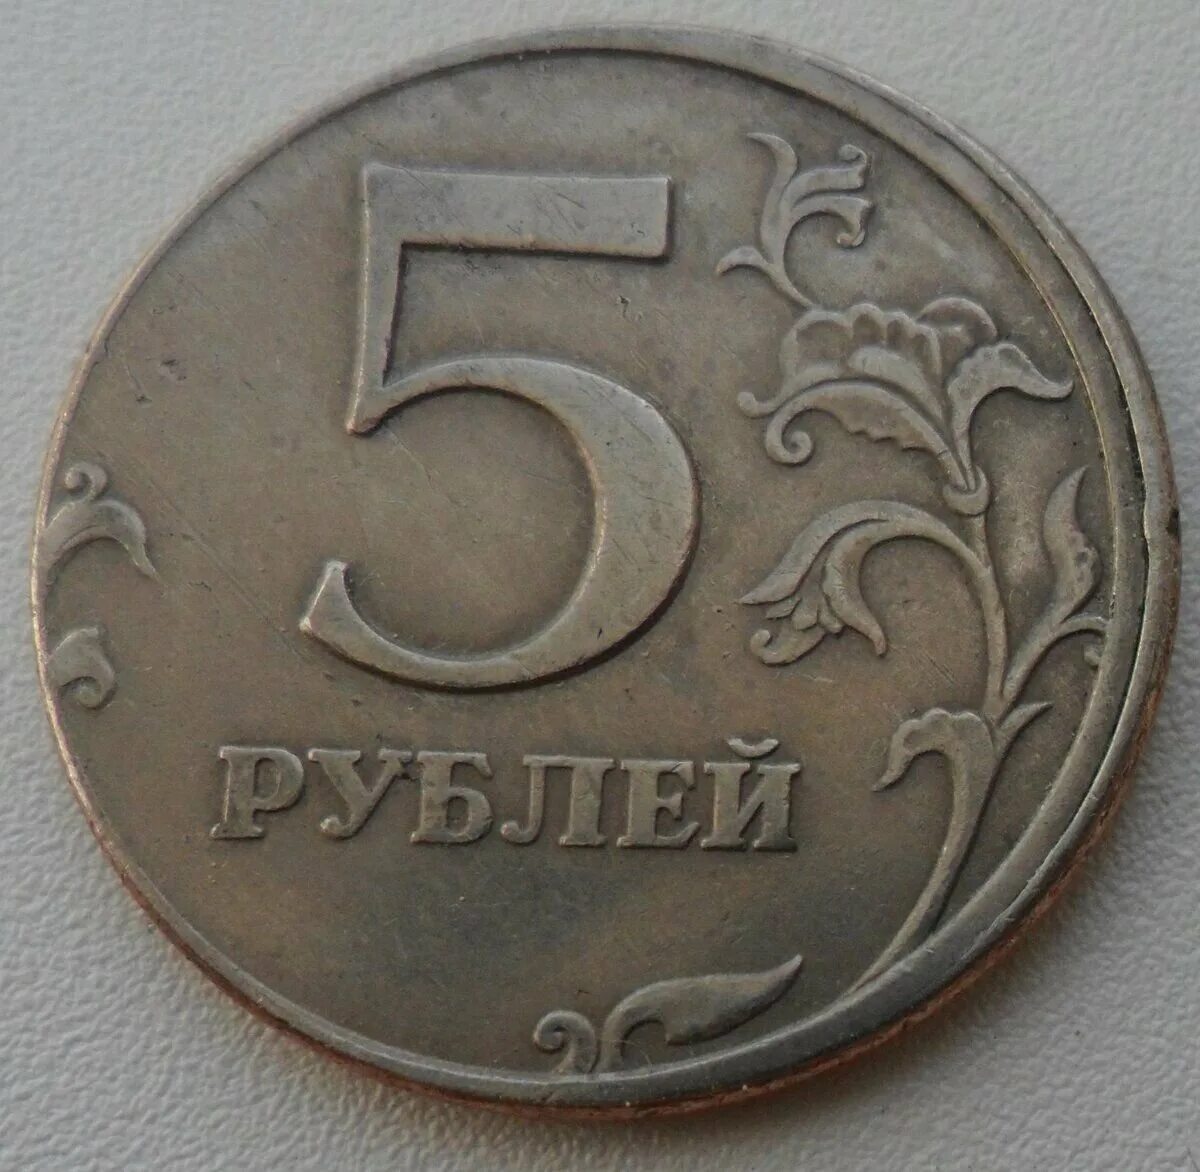 Брак монеты 5 рублей. Бракованная 5 рублевая монета. Брак монеты смещение. Бракованные монеты 5 рублей.